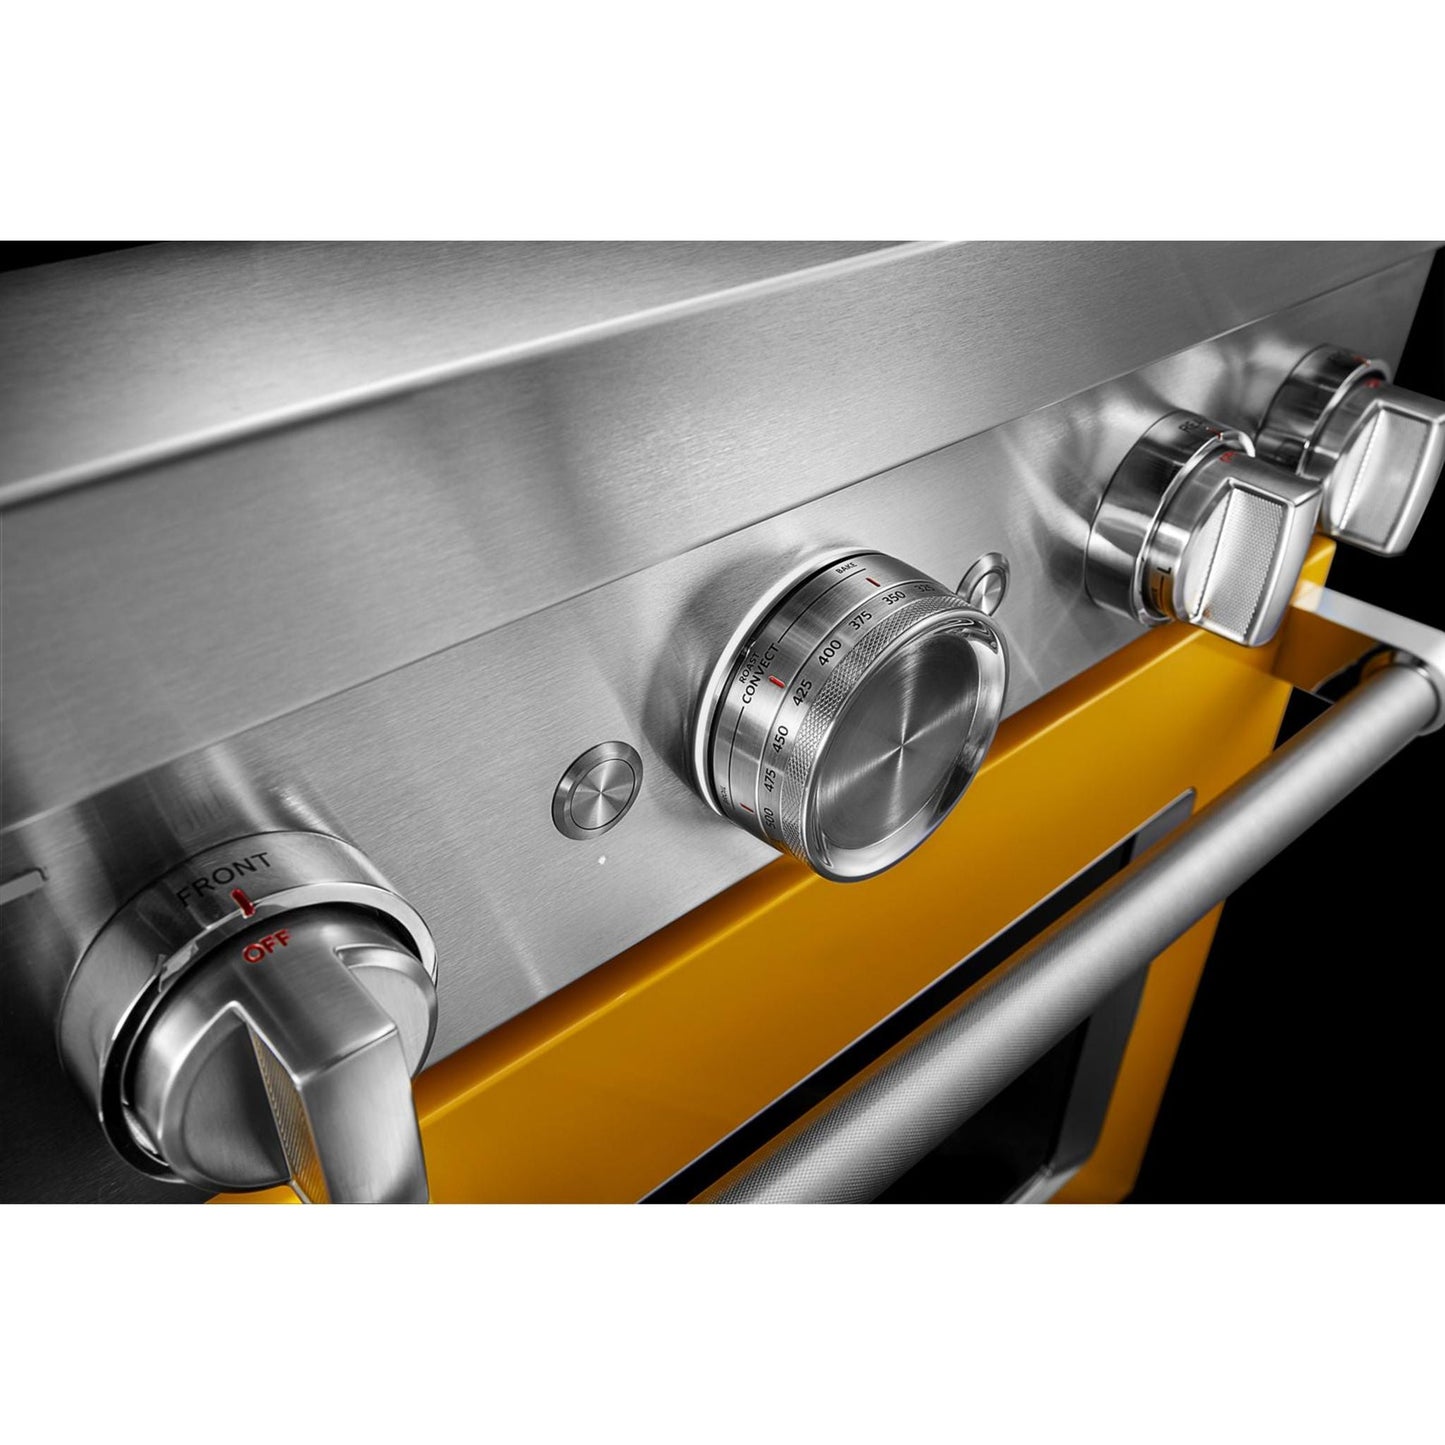 KitchenAid Dual Fuel Range (KFDC500JYP) - Yellow Pepper